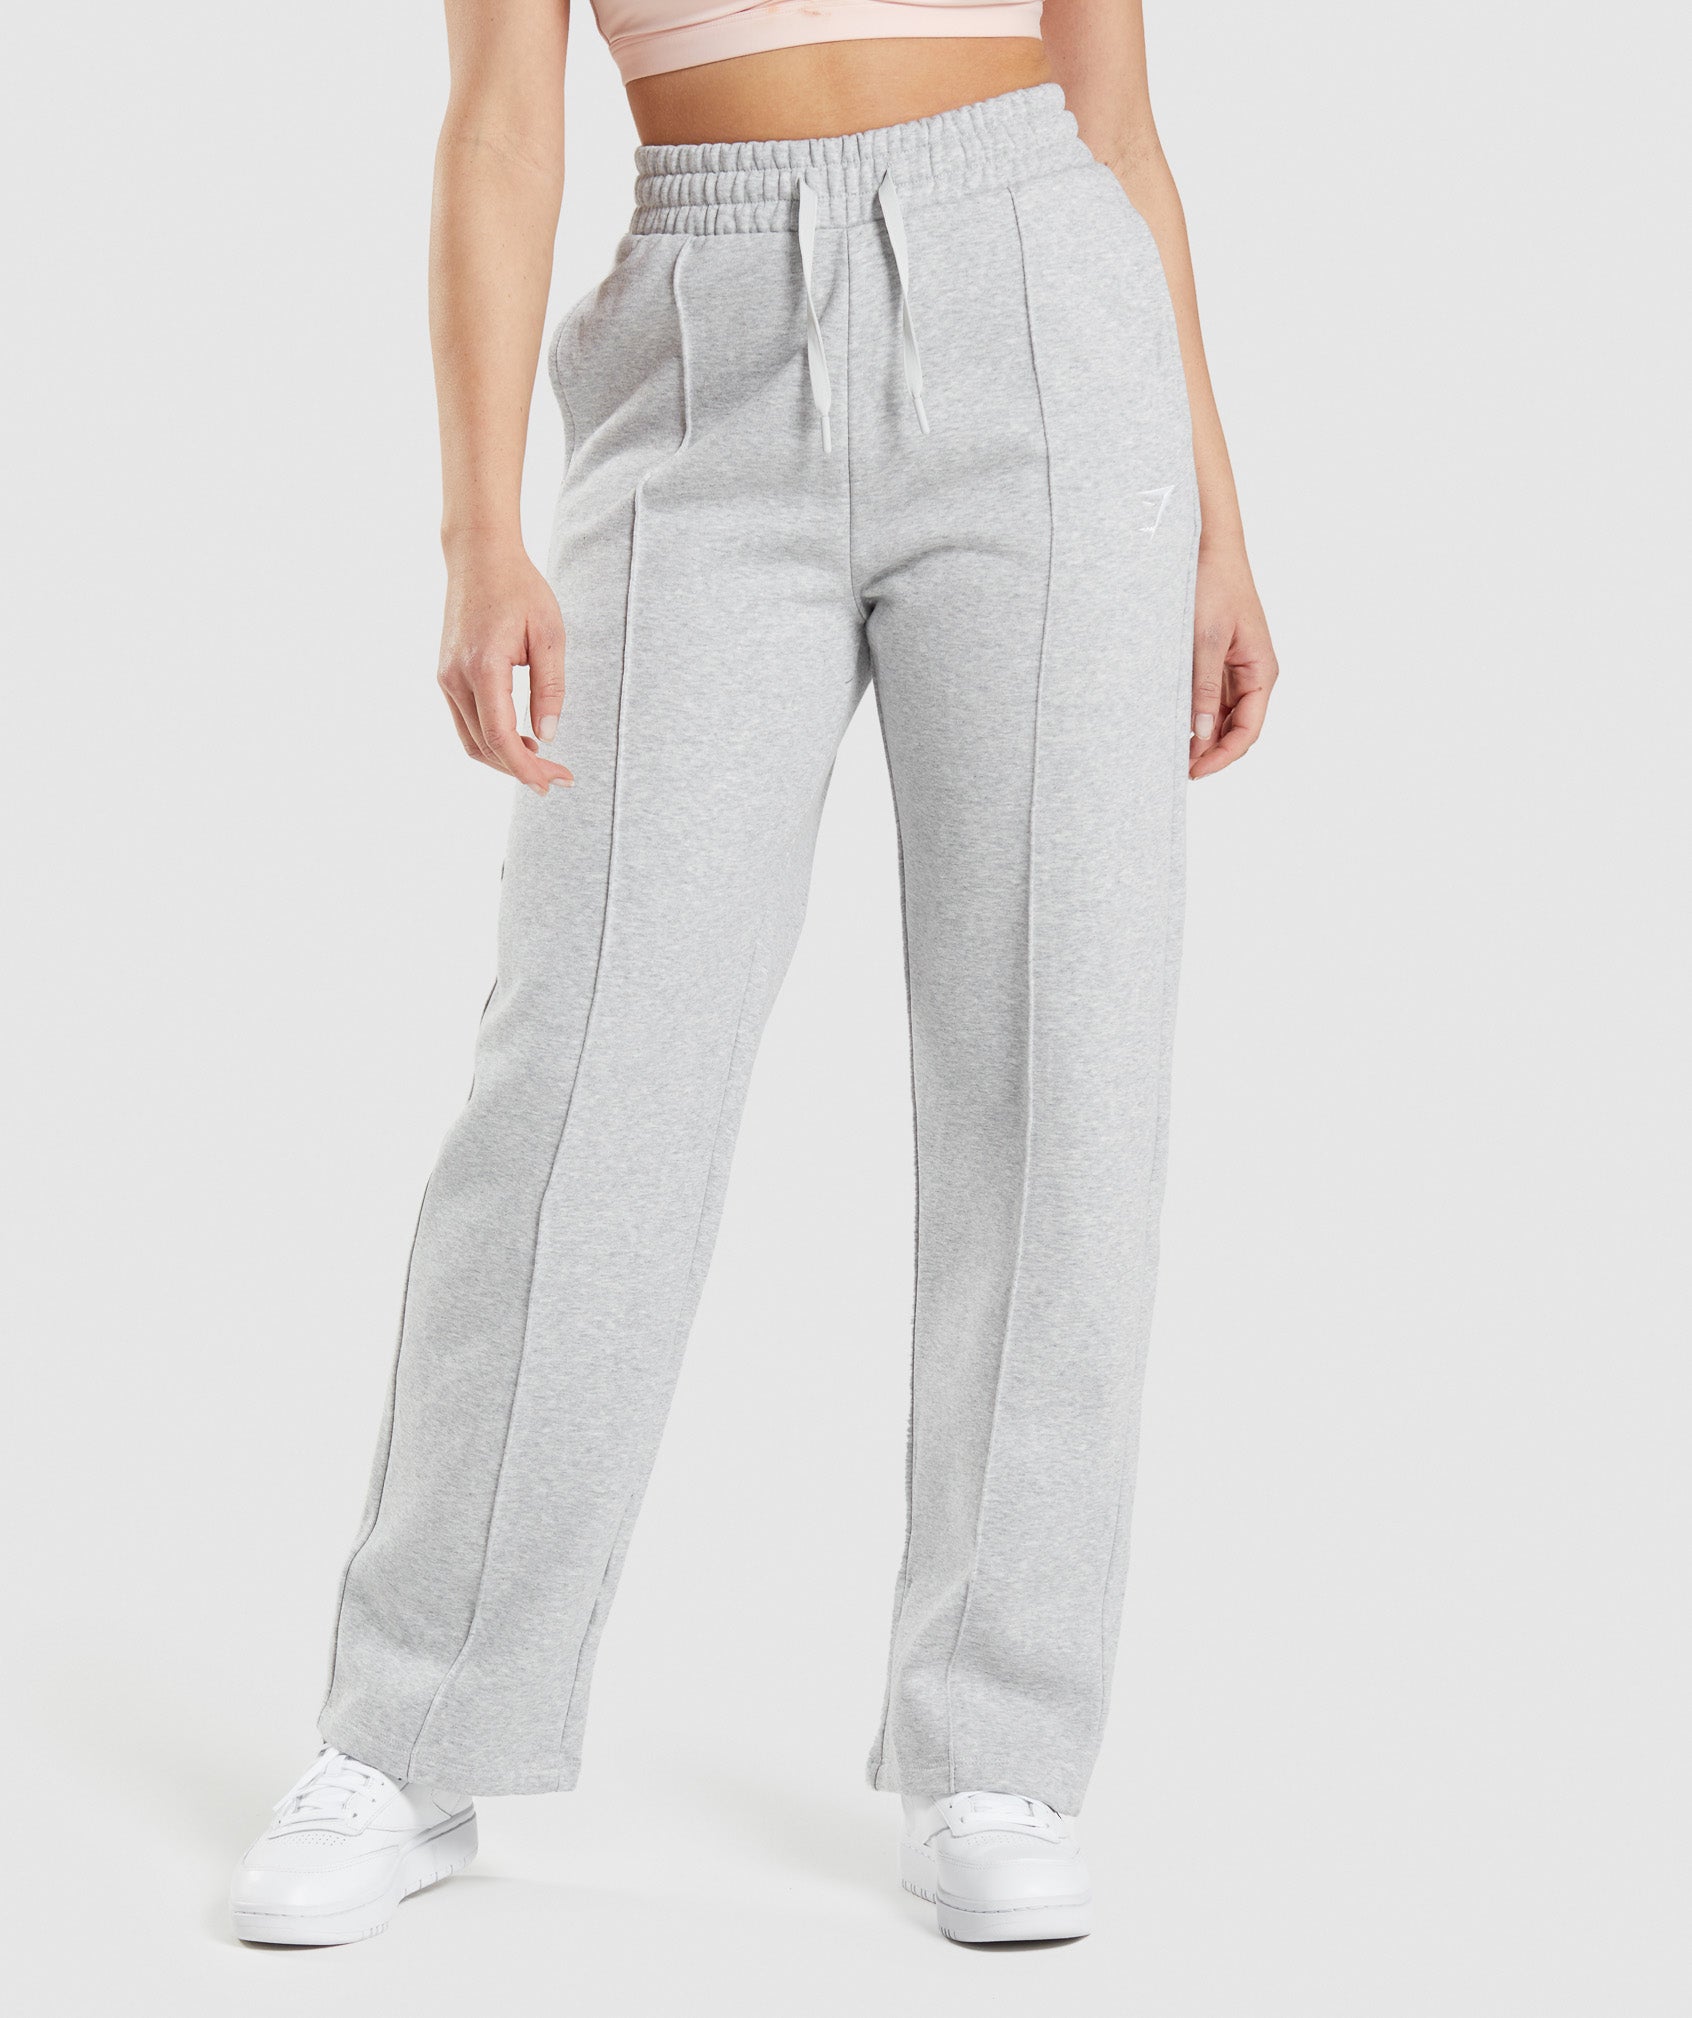 Gymshark sweatpants gray joggers - Gem